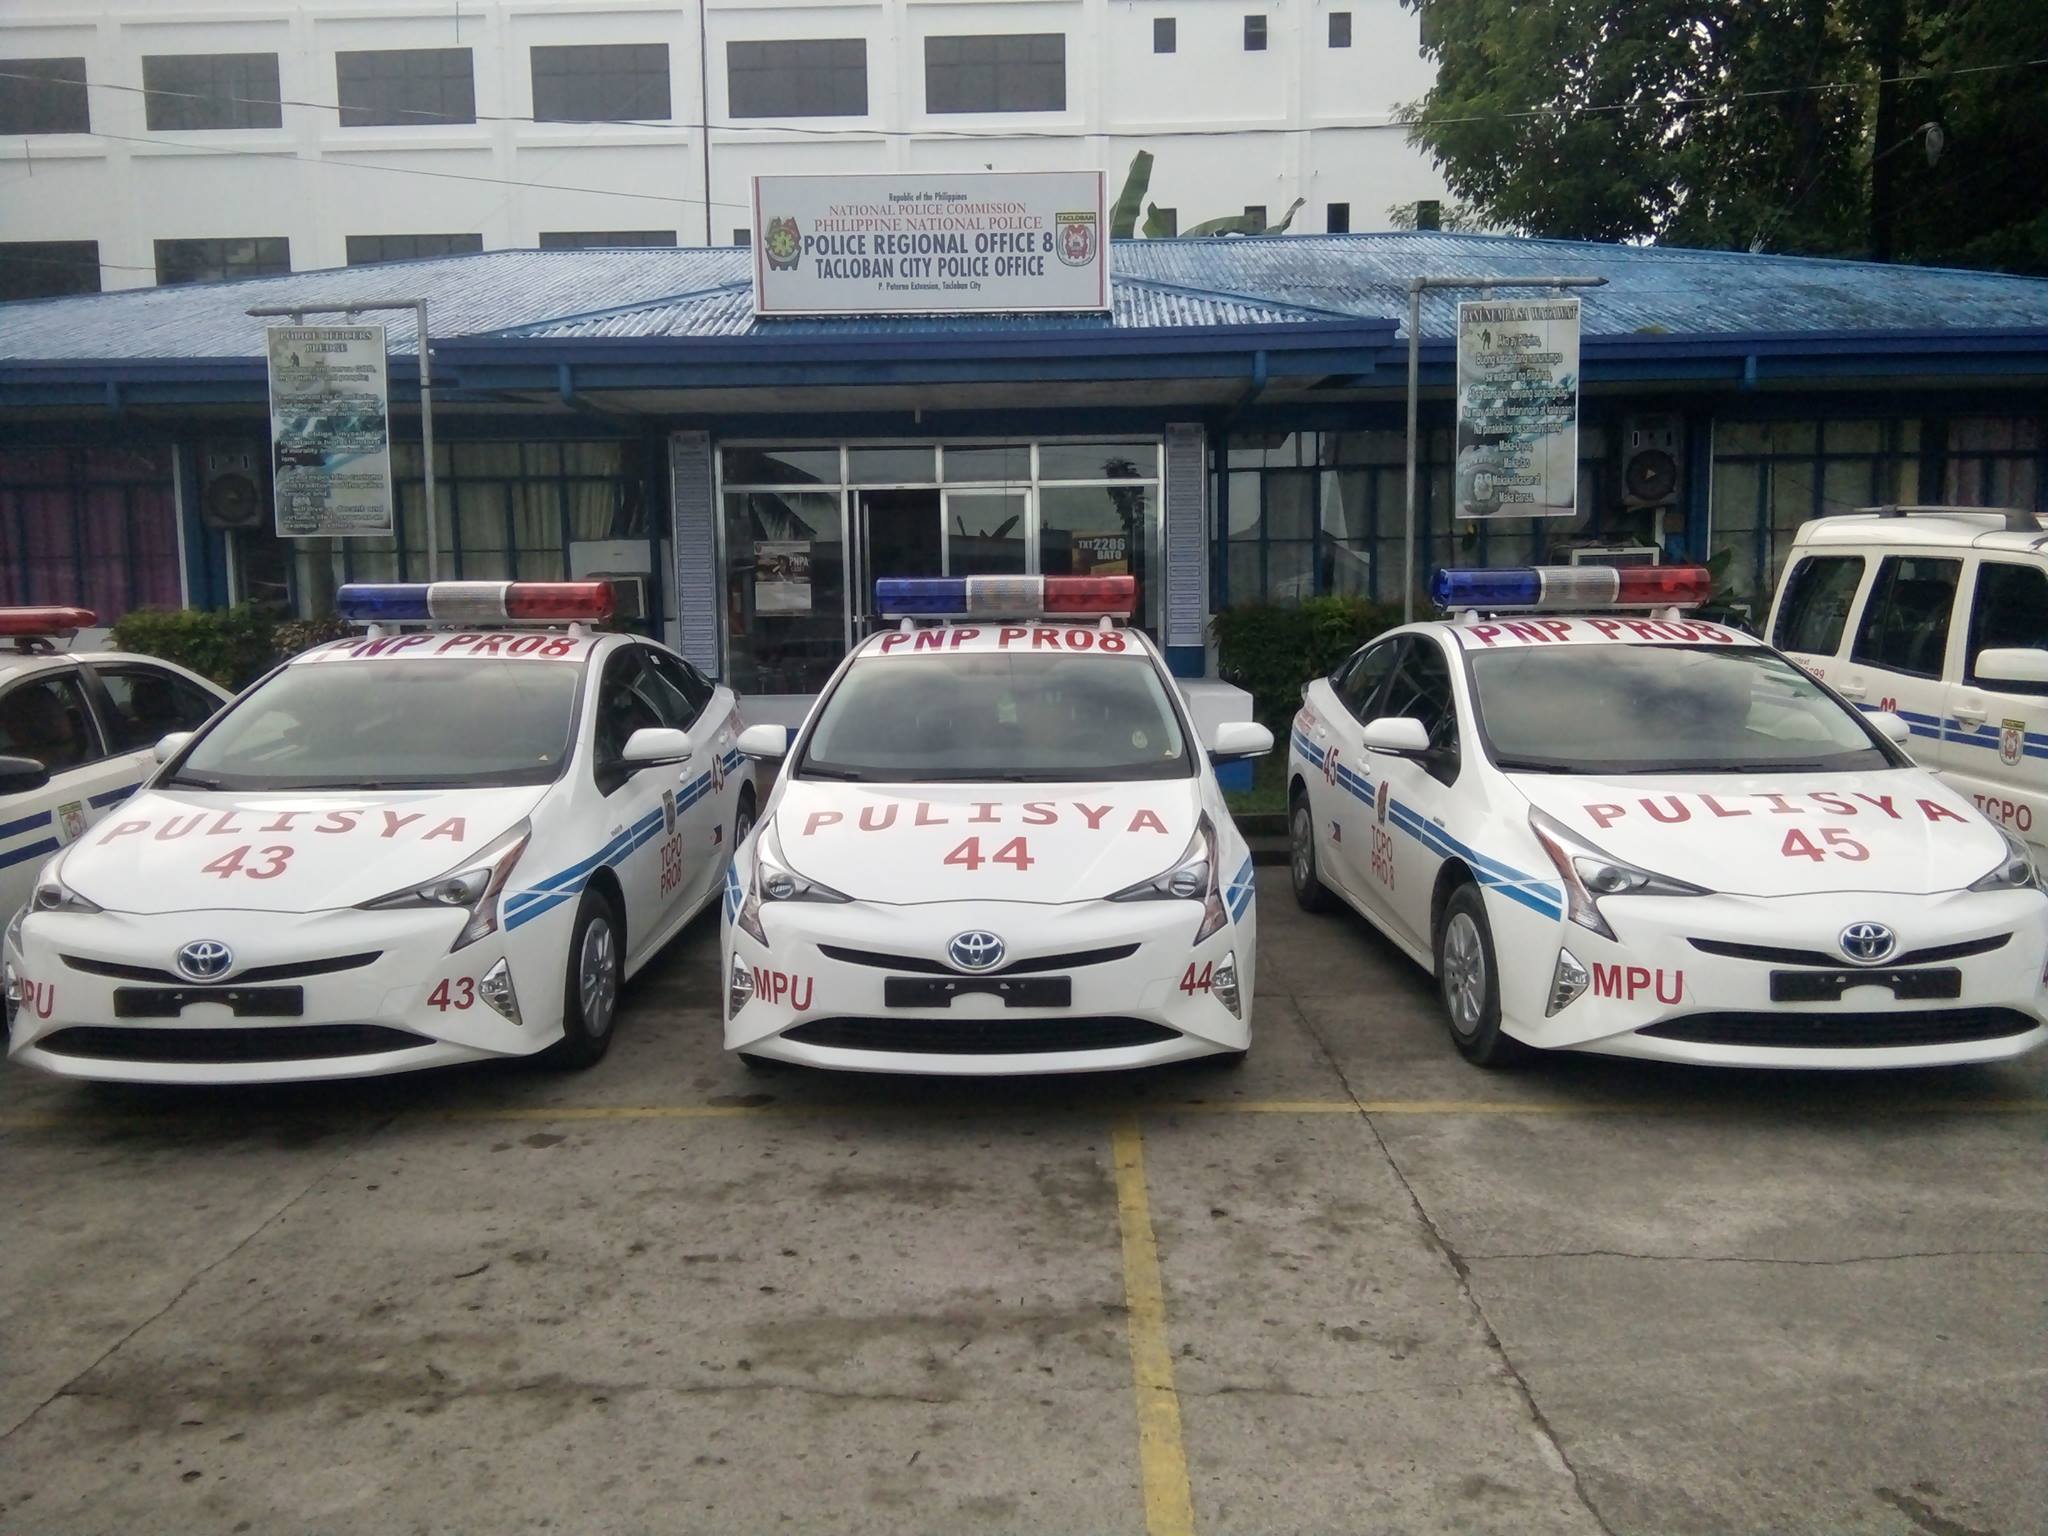 PNP_Toyota_Prius_of_Tacloban_City_Police_Office.jpg